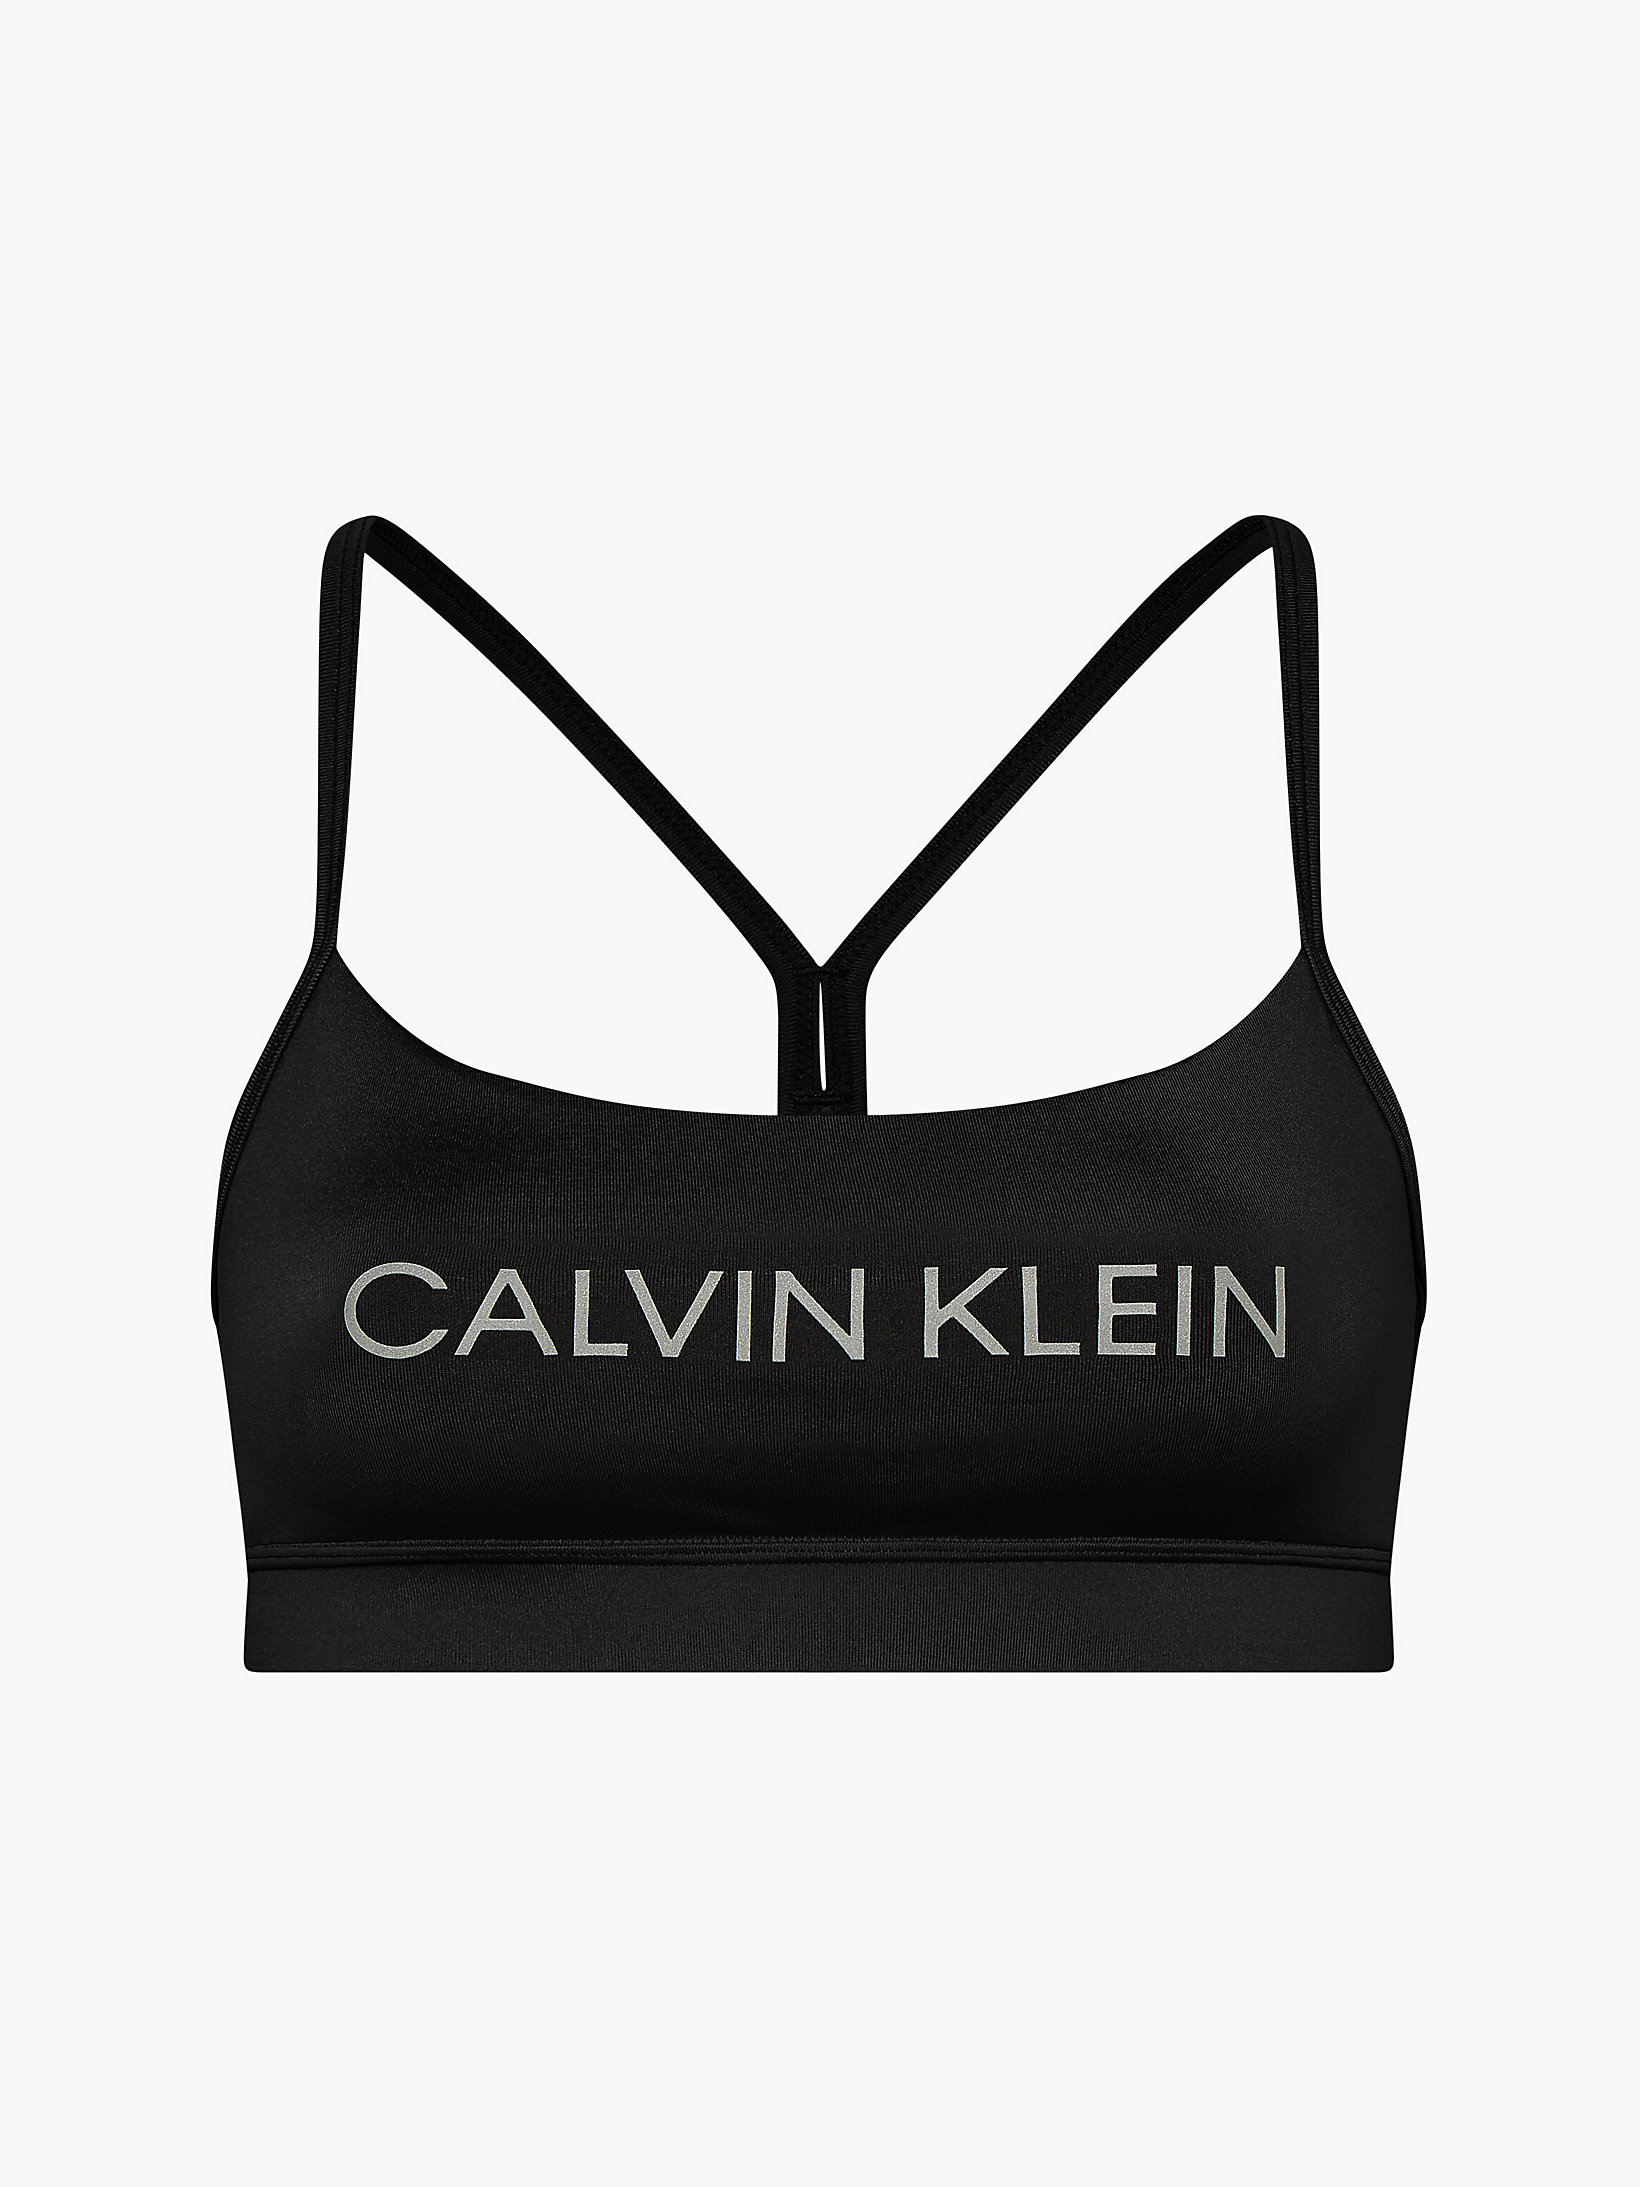 CK Black/reflective Silver Low Impact Sports Bra undefined women Calvin Klein